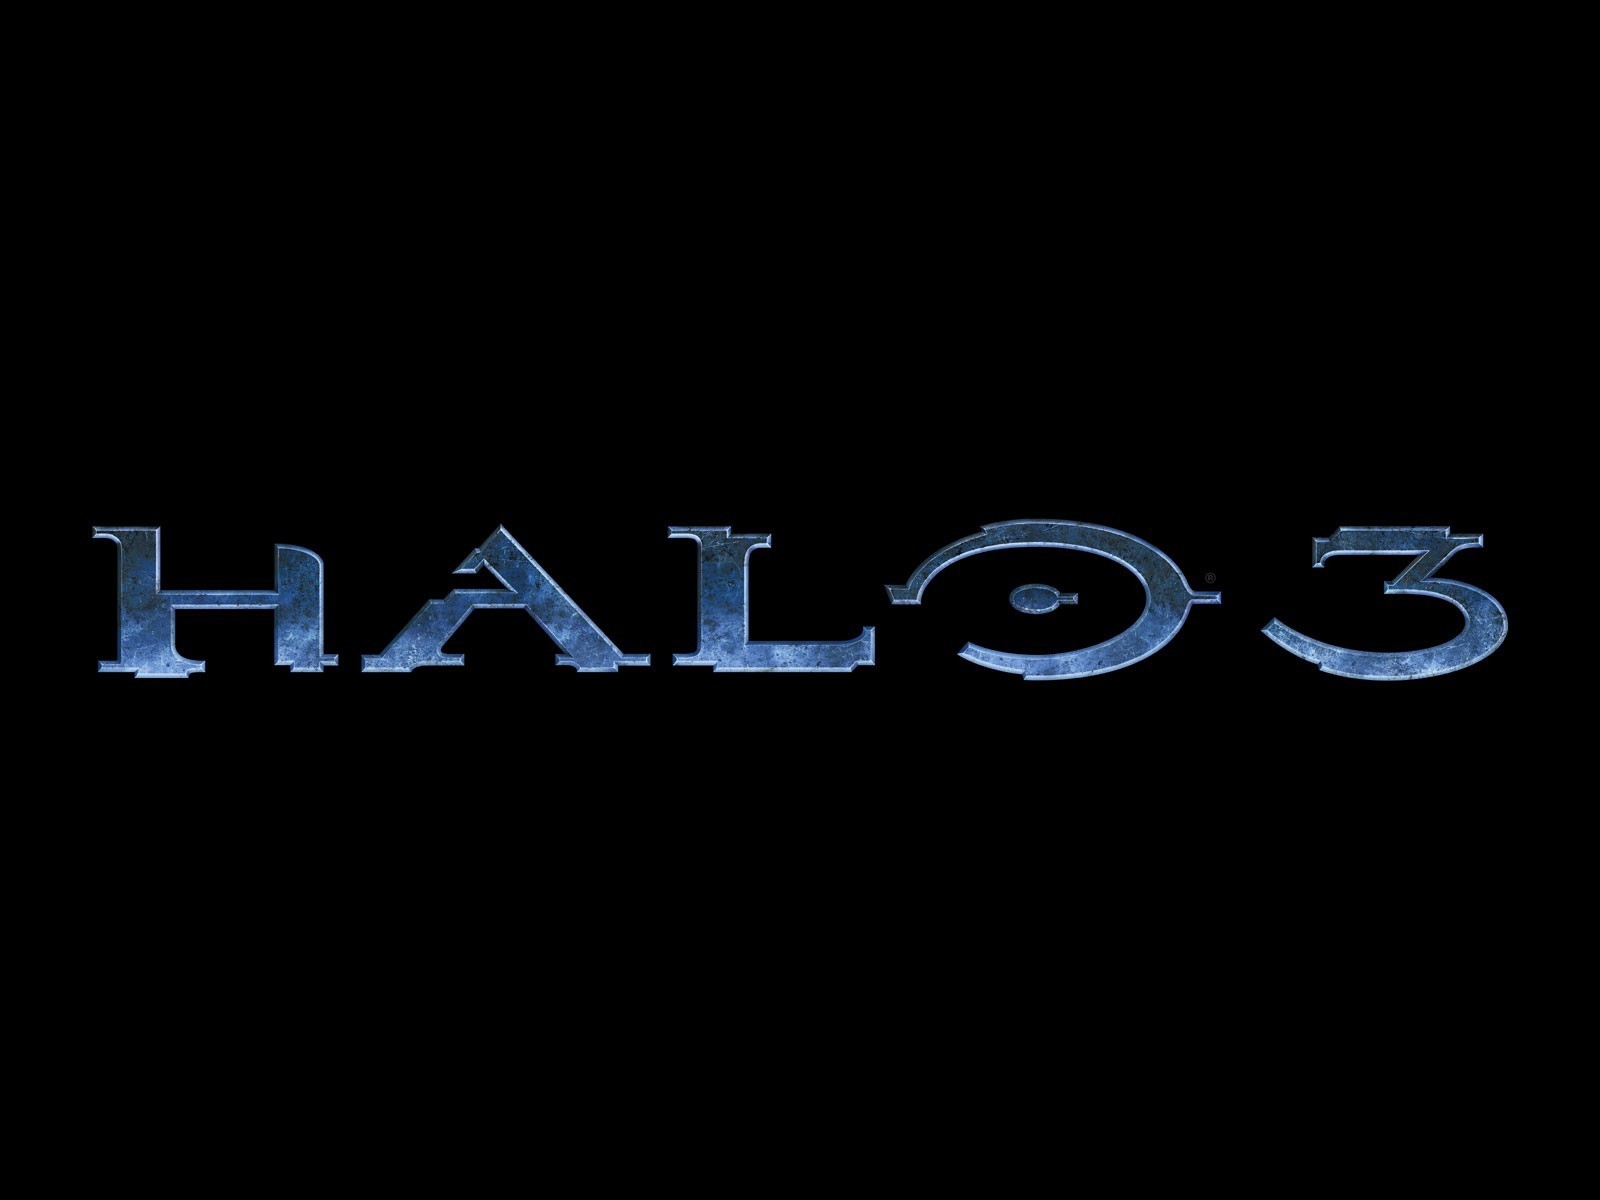 Xbox360 Halo Game Wallpaper No Desktop